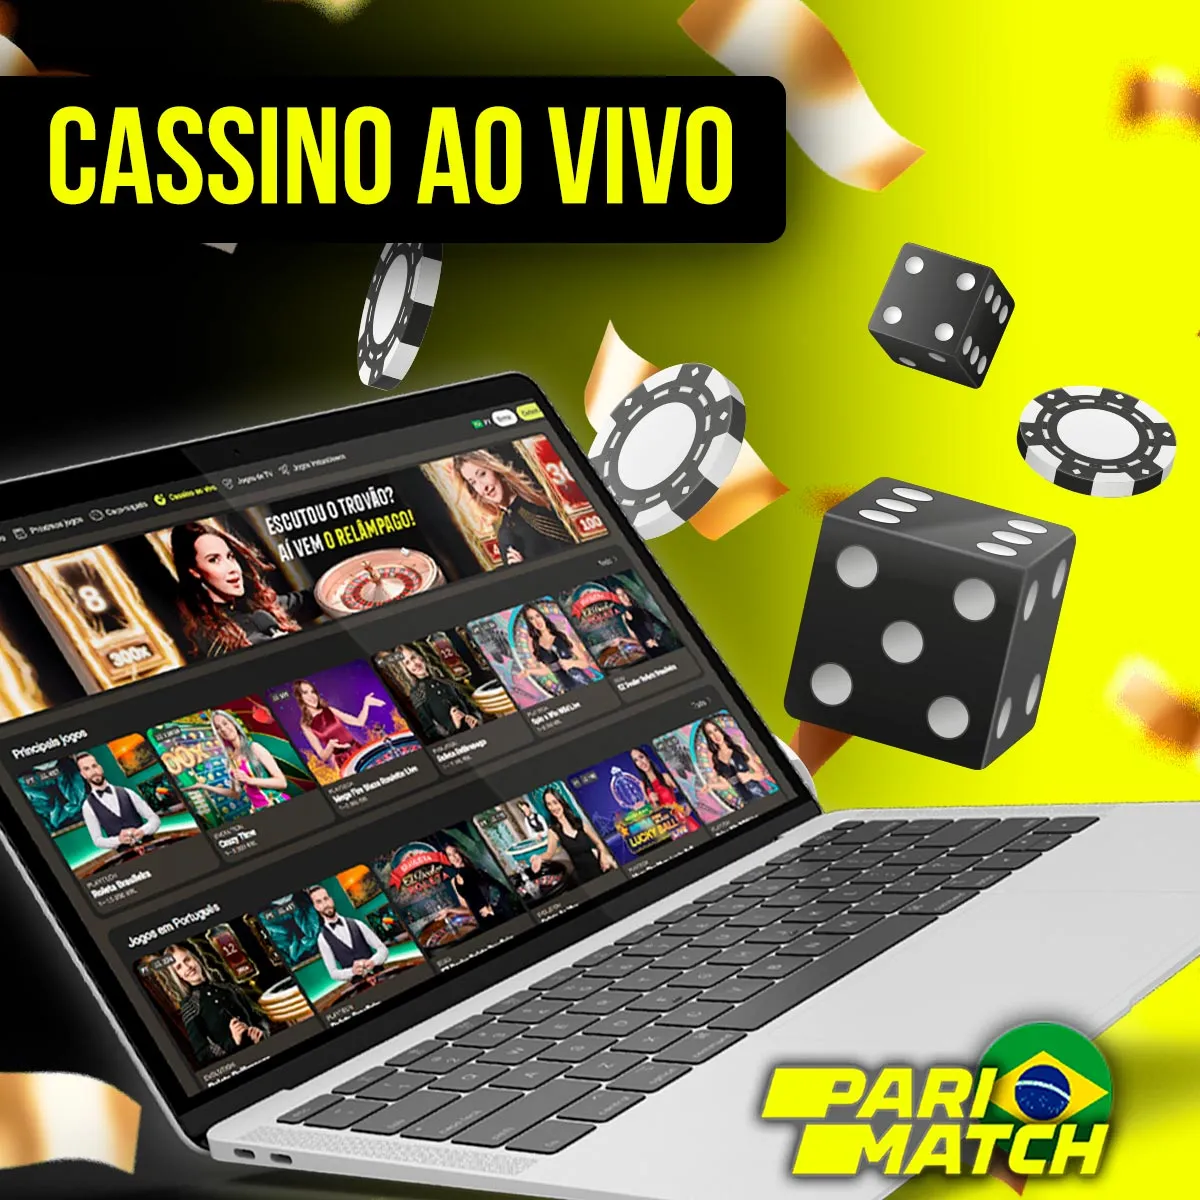 Parimatch casino ao vivo no mercado brasileiro